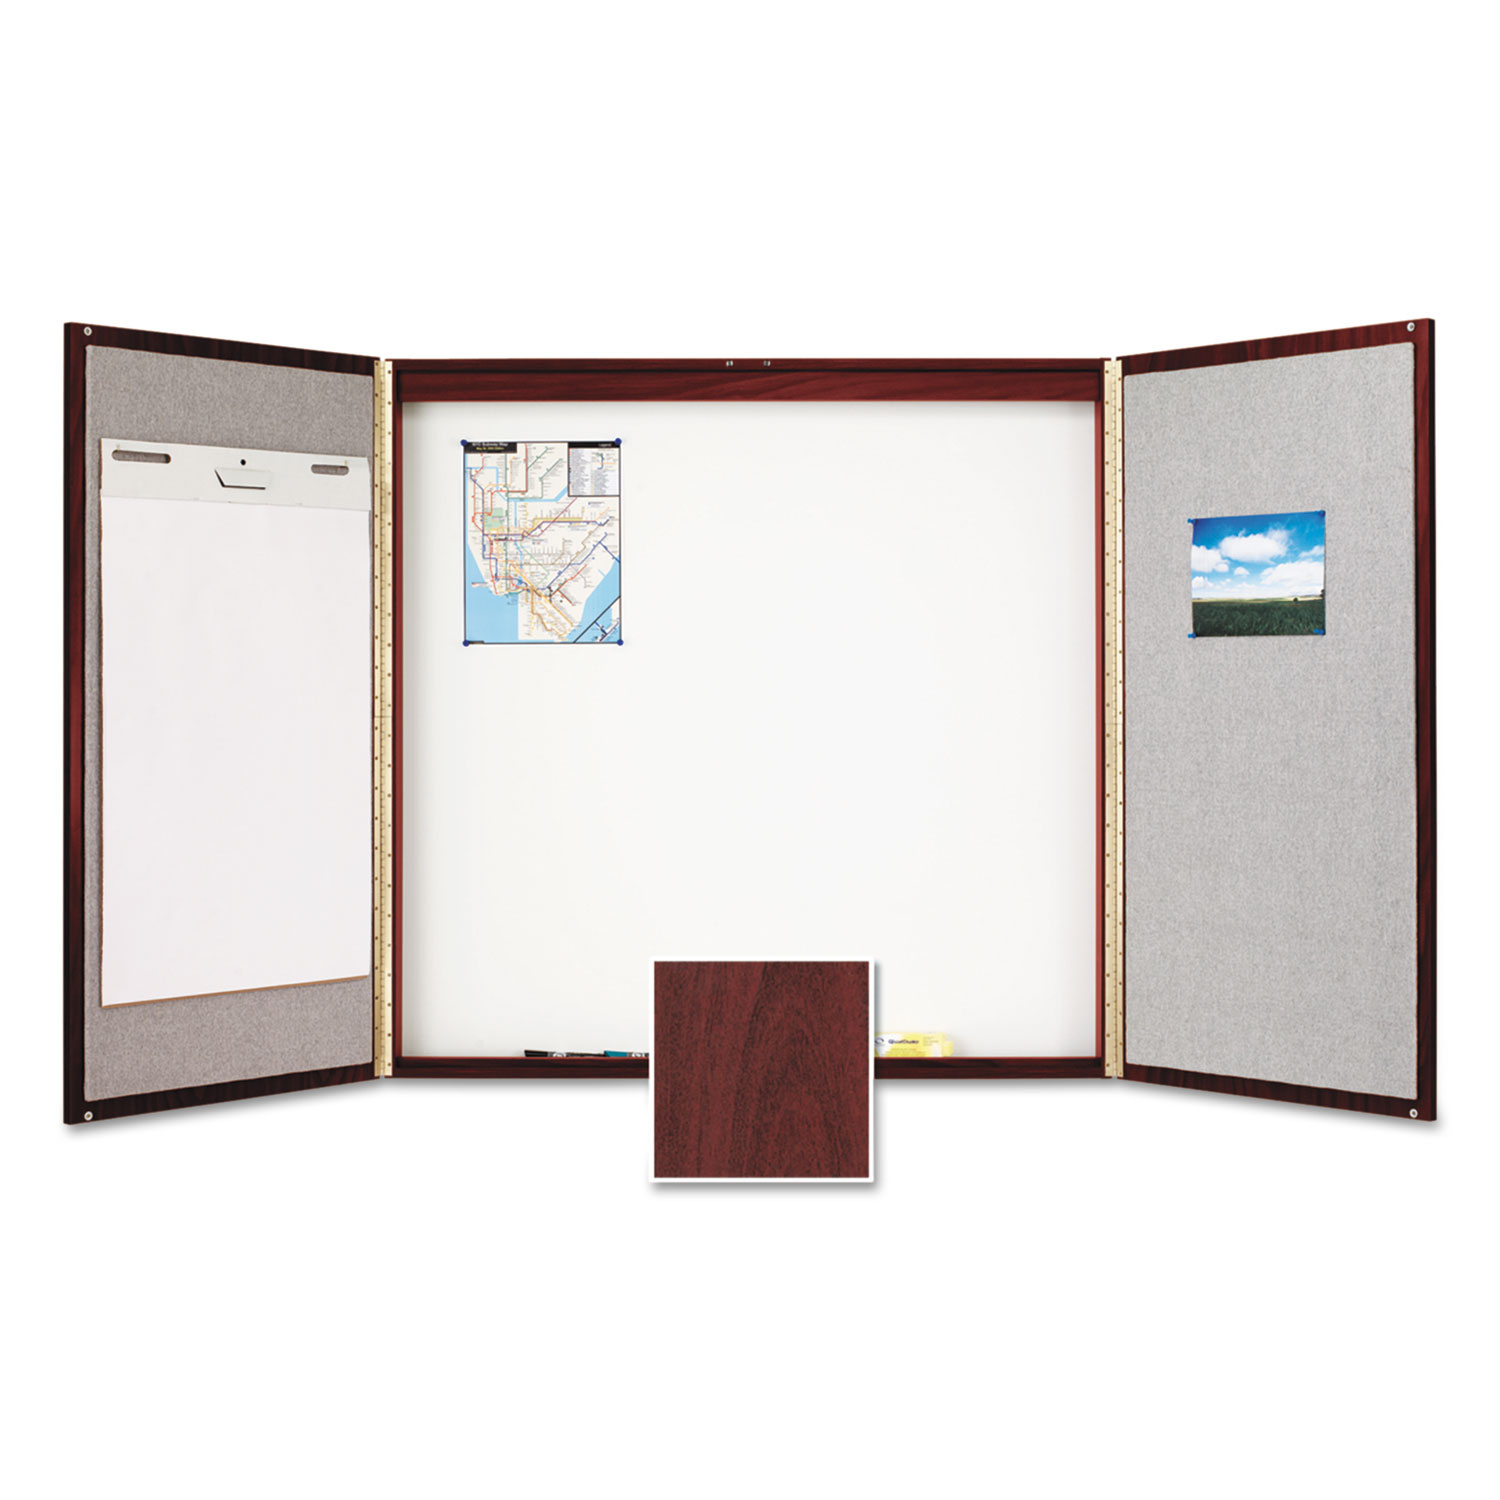  Quartet 878 Cabinet, Fabric/Porcelain-on-Steel, 48 x 48 x 2, Beige/White, Mahogany Frame (QRT878) 